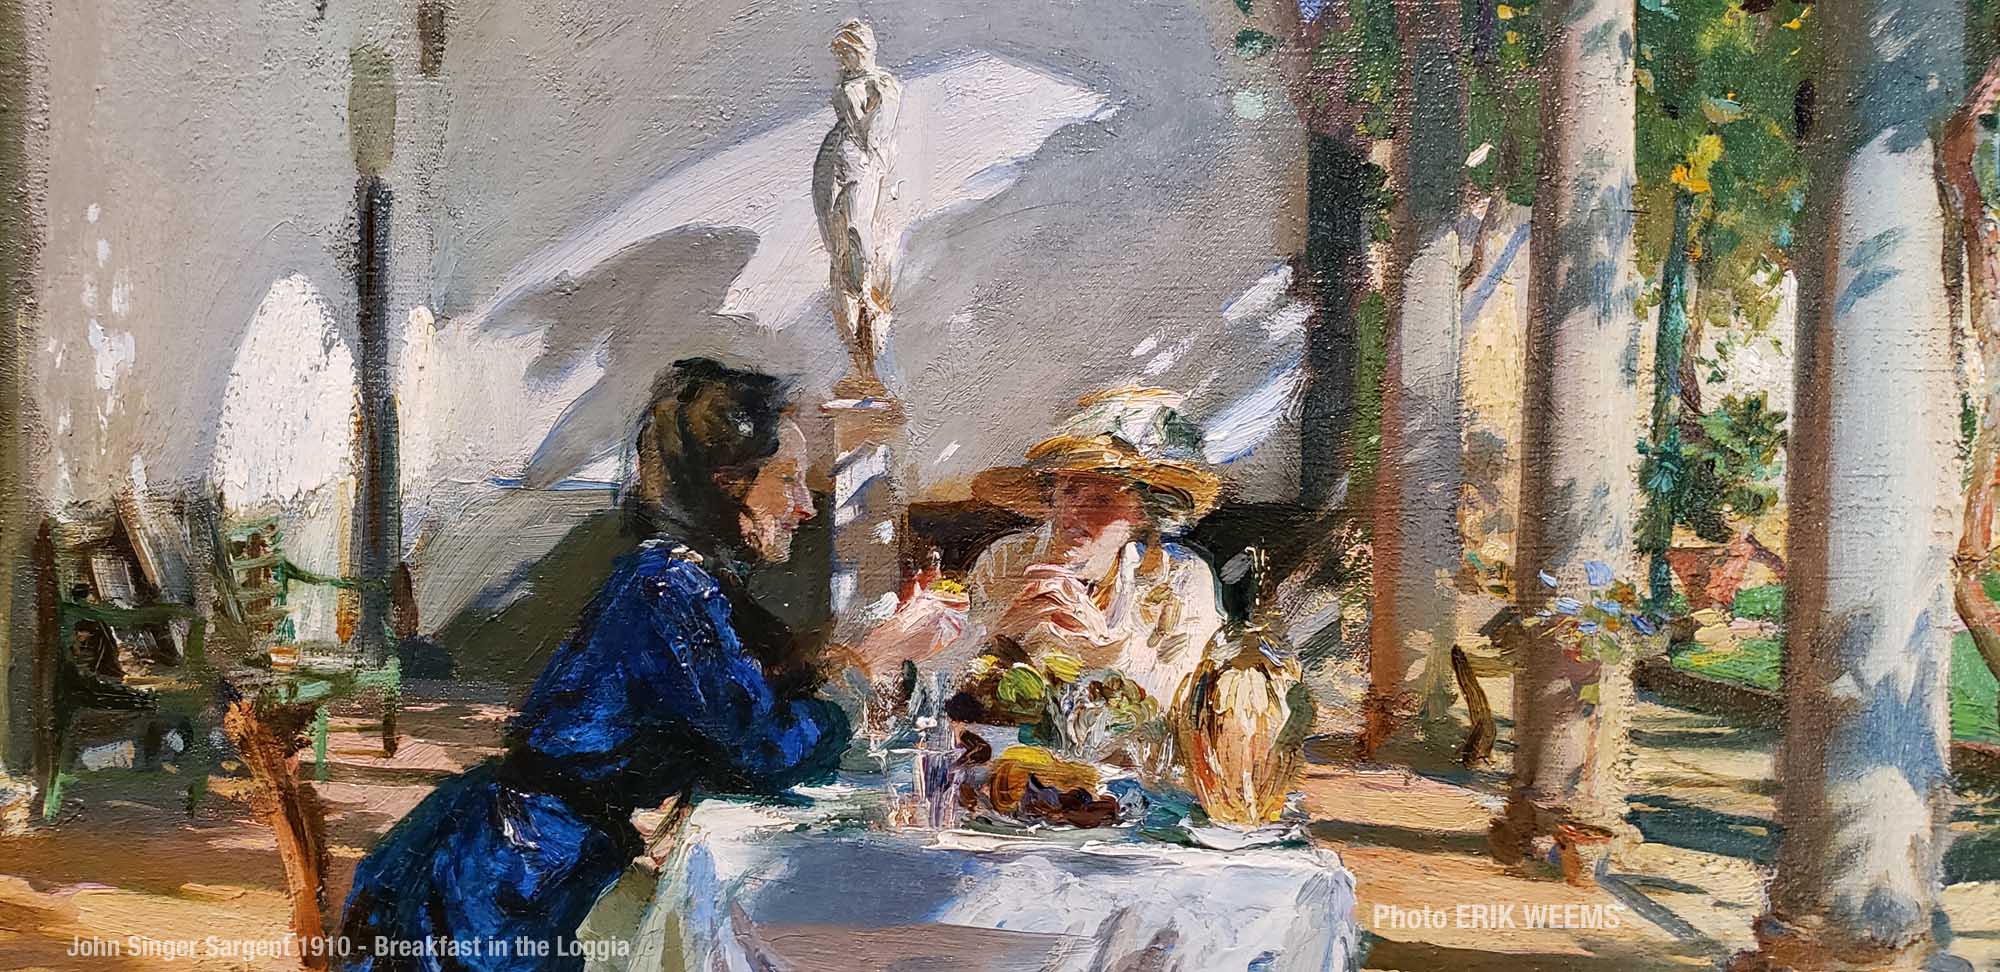 John Singer Sargent 1910 - Breakfast in the Loggia